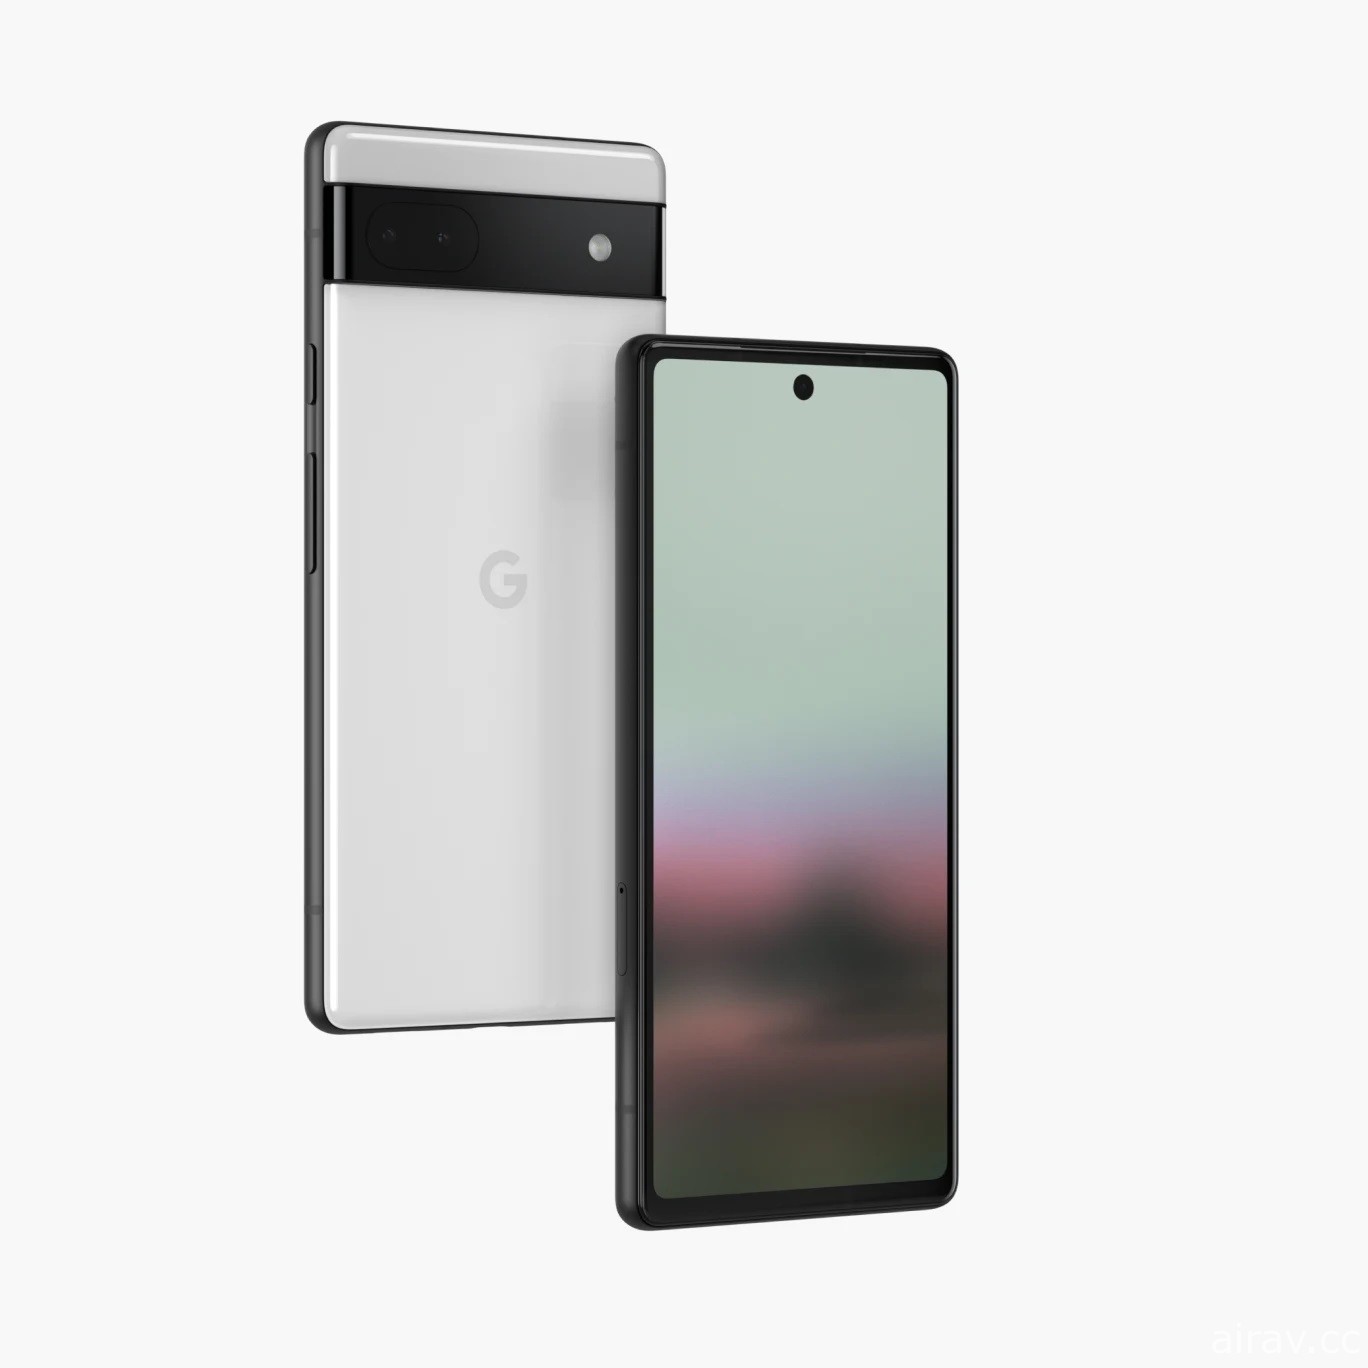 Google 智慧型手機 Google Pixel 6a 預定 7/28 上市 建議售價 13,990 元